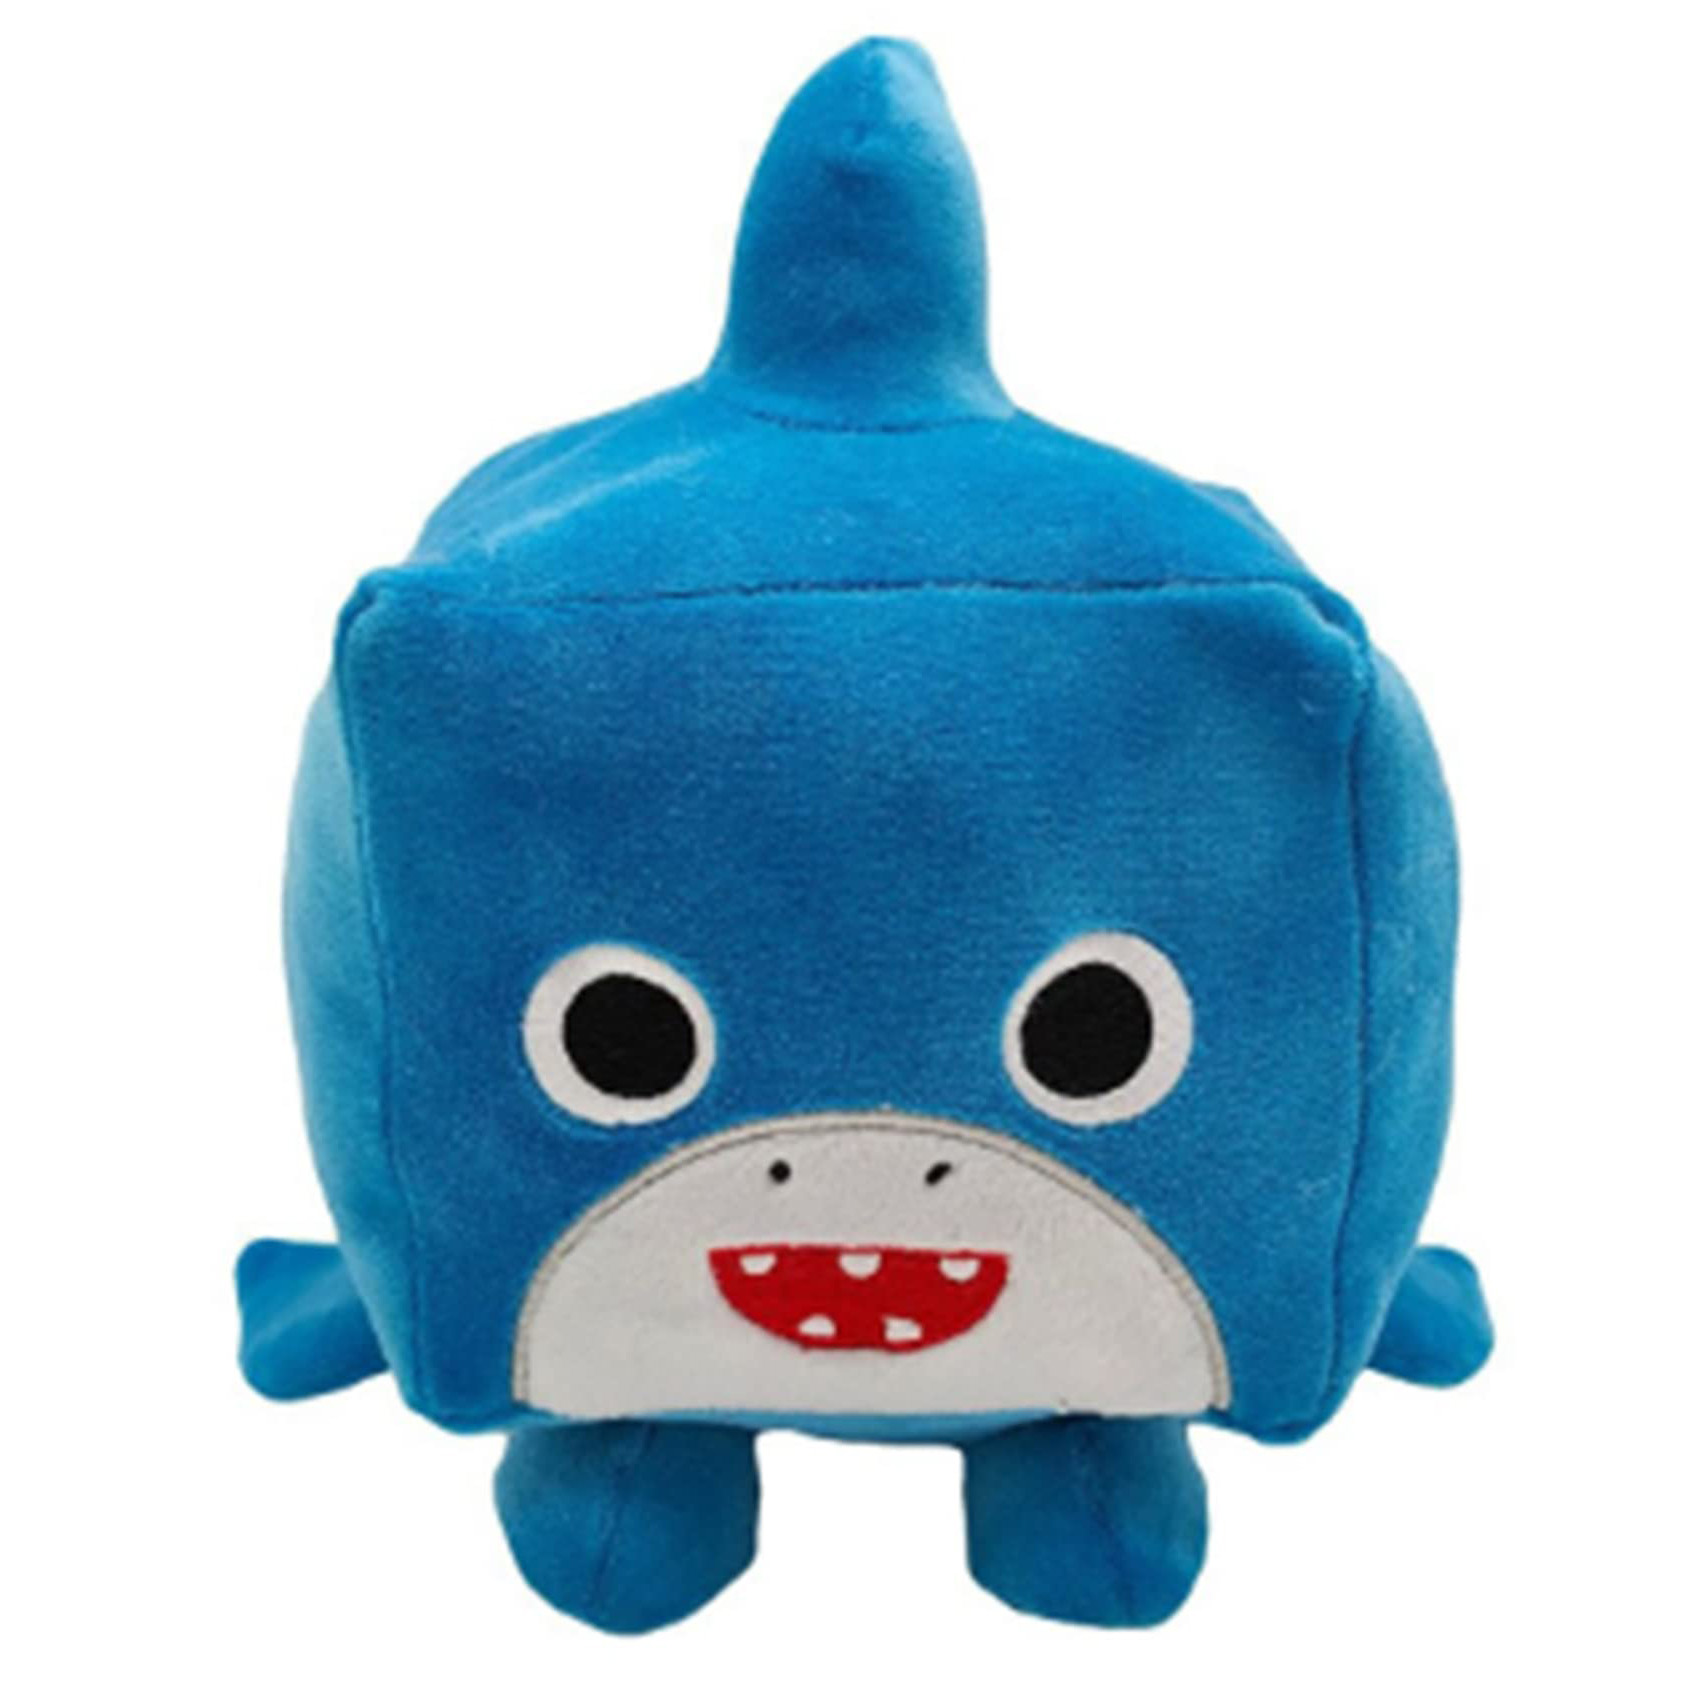 Blue Shark Stuffed Animal Cute Kawaii Soft Toy for Kids and Fans